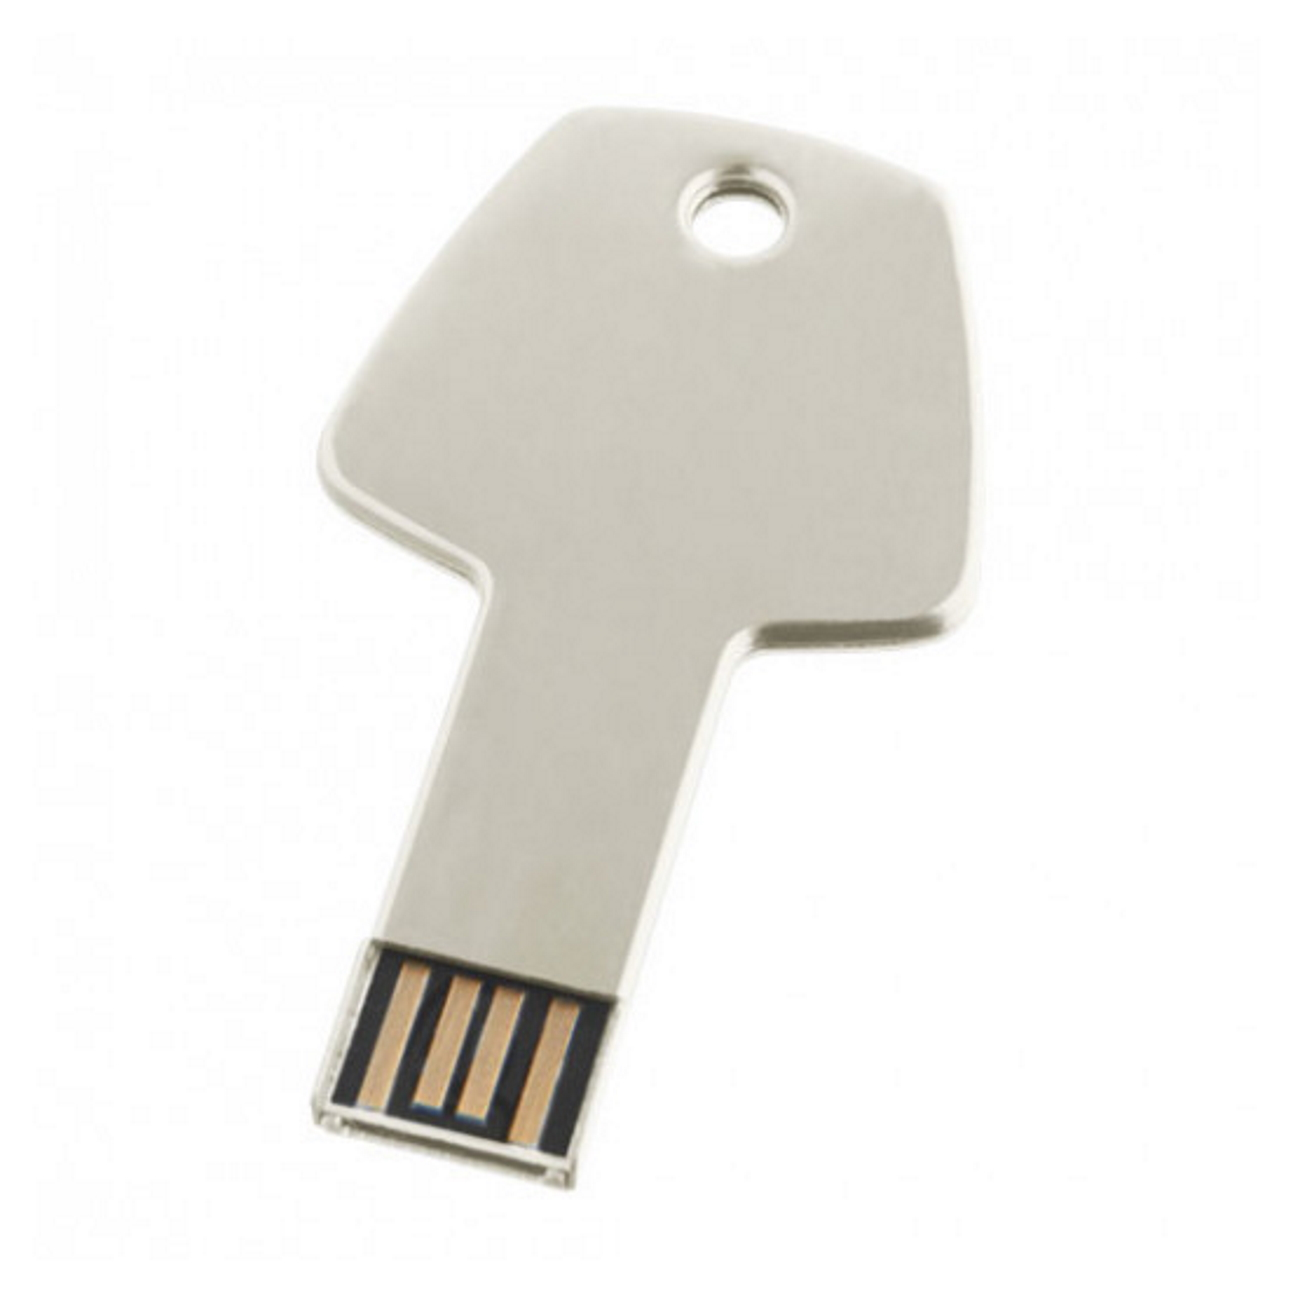 (Silber, USB GERMANY GB) ®Schlüssel 128 USB-Stick Key